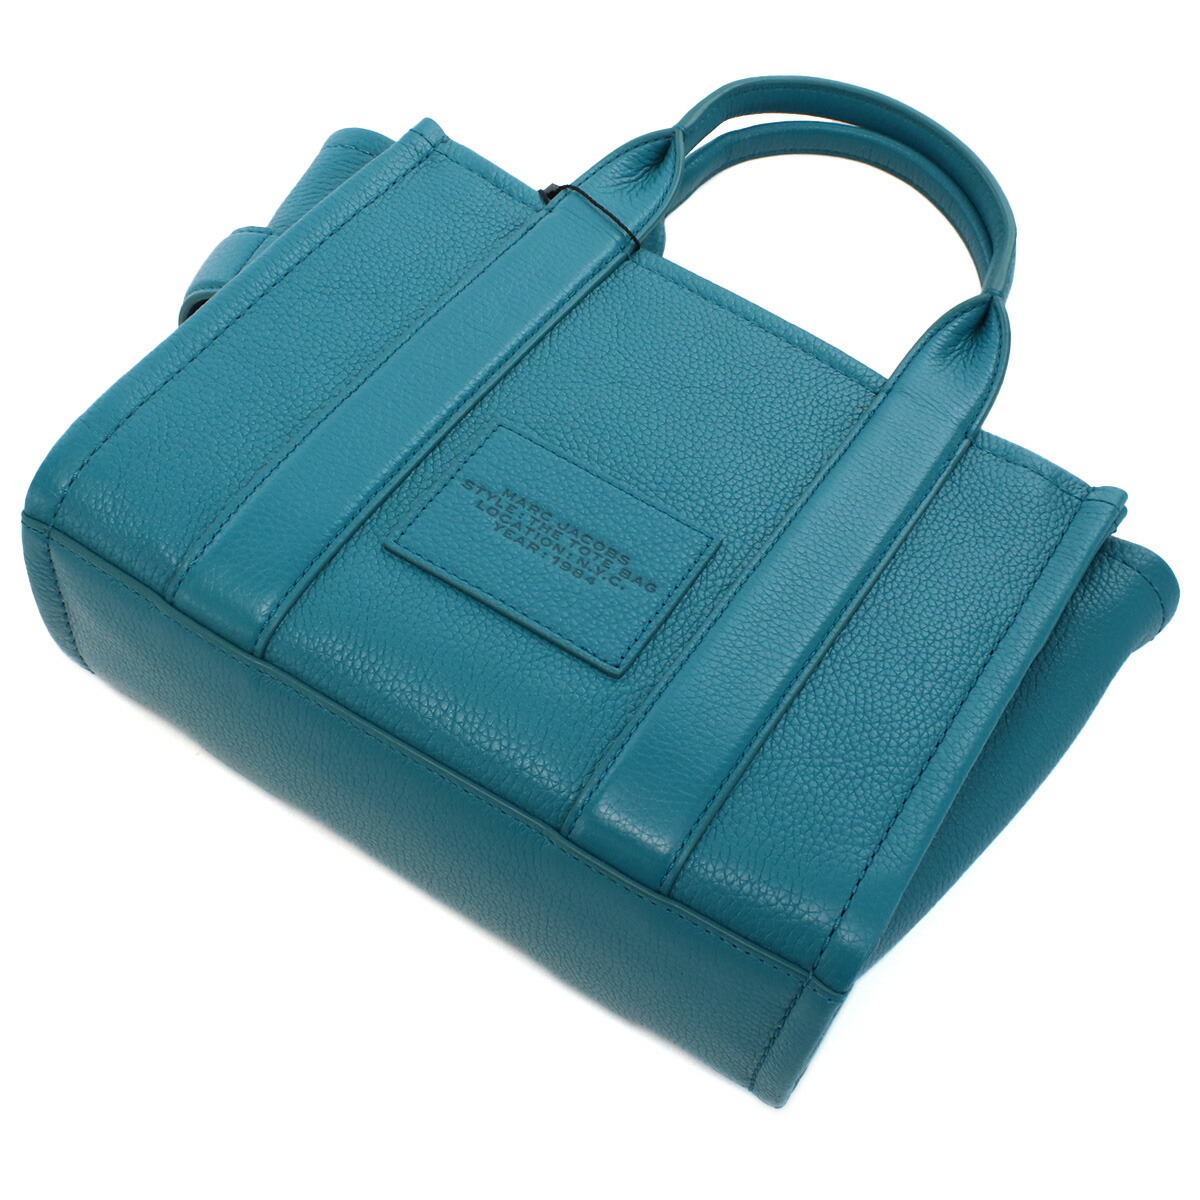 Armerie Boutique マークジェイコブス MARC JACOBS MINI TRAVELER TOTE トートバッグ ブランド  2way H009L01SP21 443 HARBOR BLUE ブルー系 bag-01 旅行バッグ